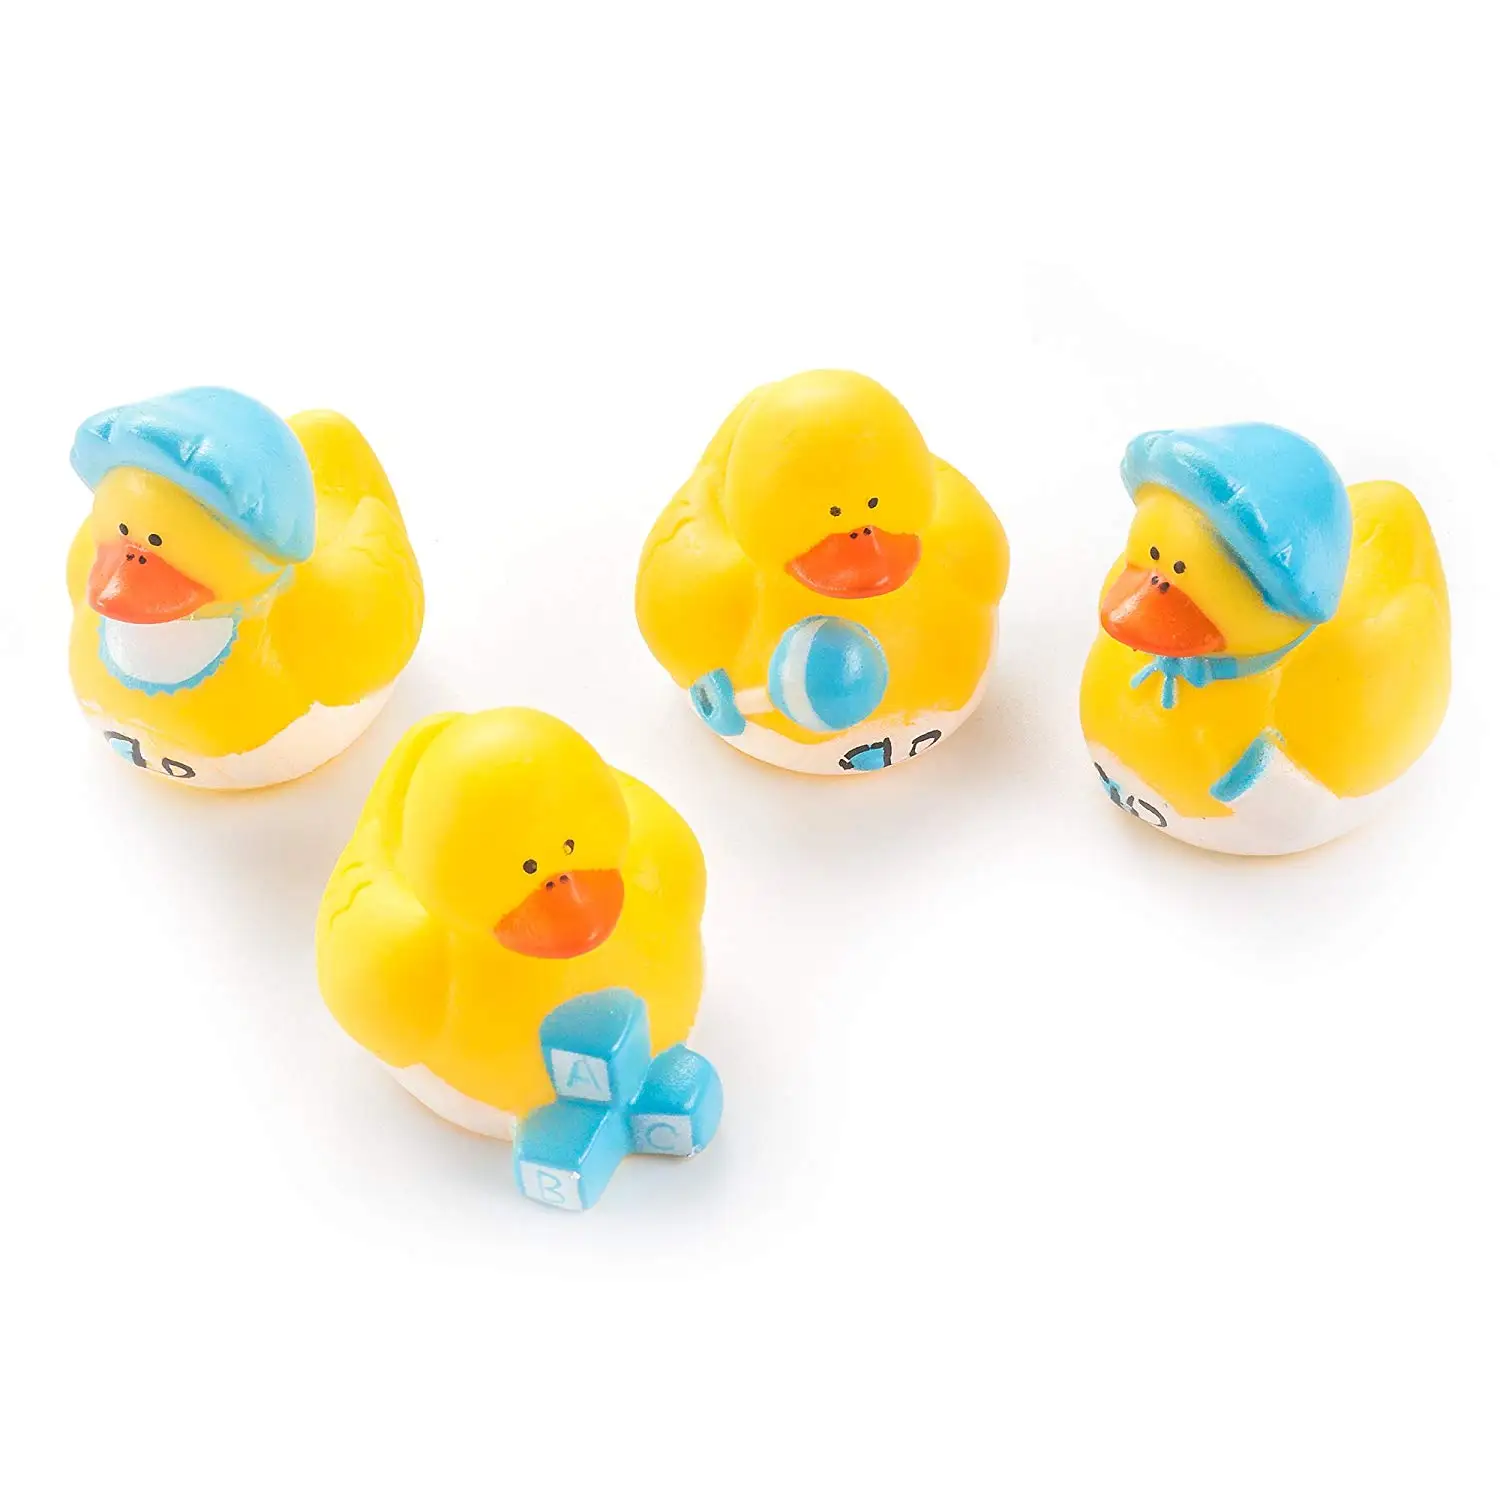 Cheap Duck Baby Shower Supplies Find Duck Baby Shower Supplies Deals On Line At Alibaba Com